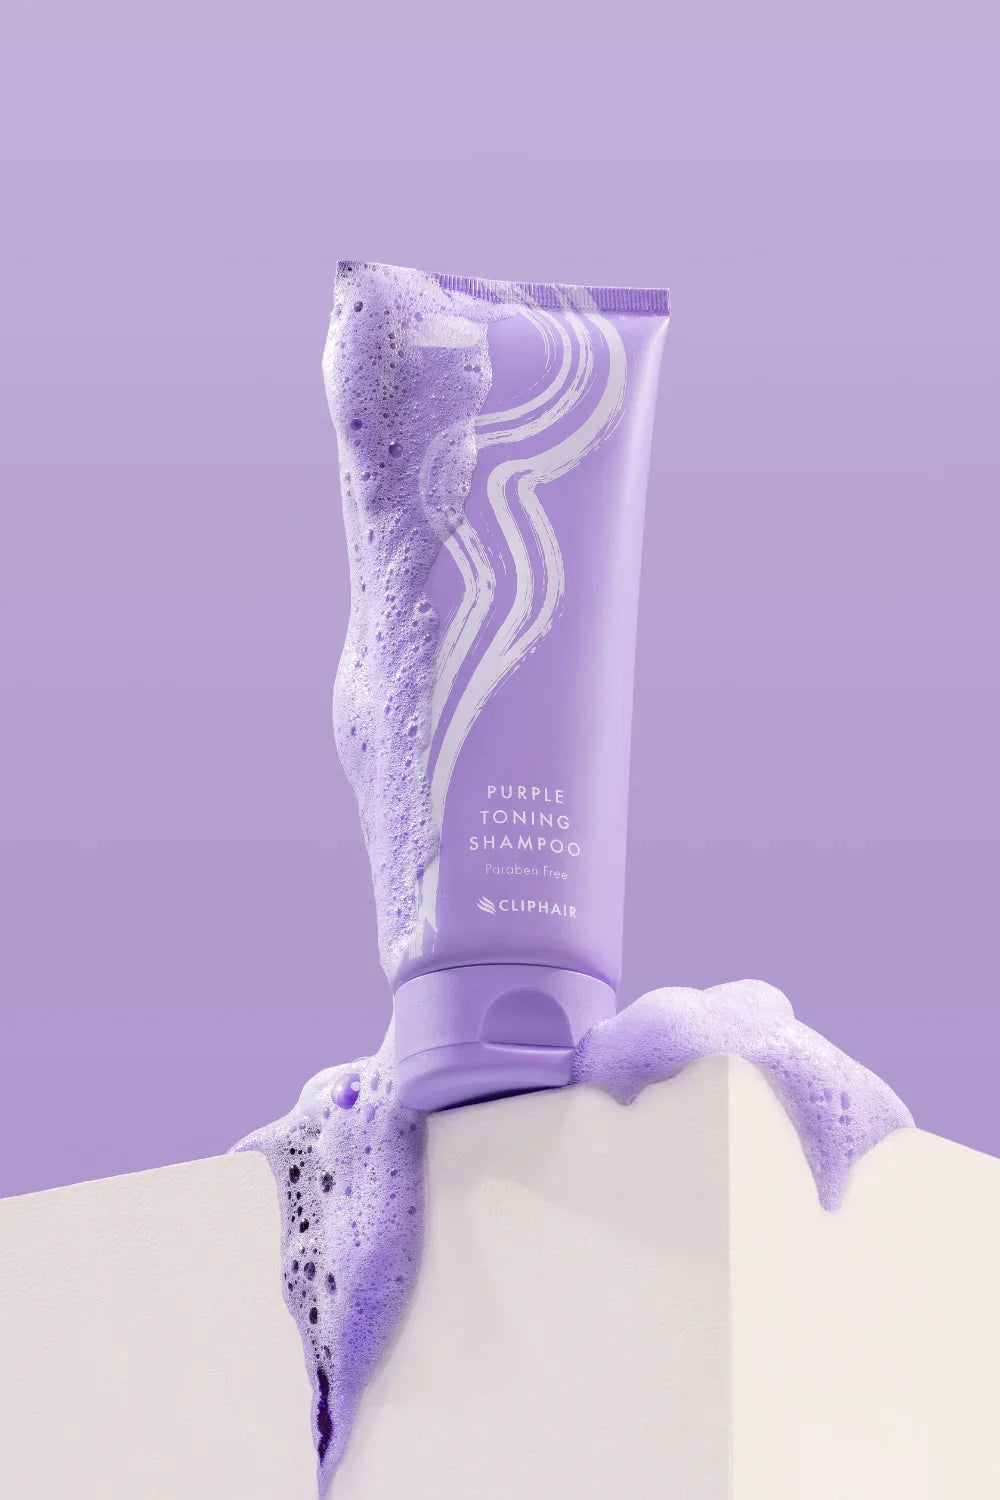 purple shampoo product bottle and foam